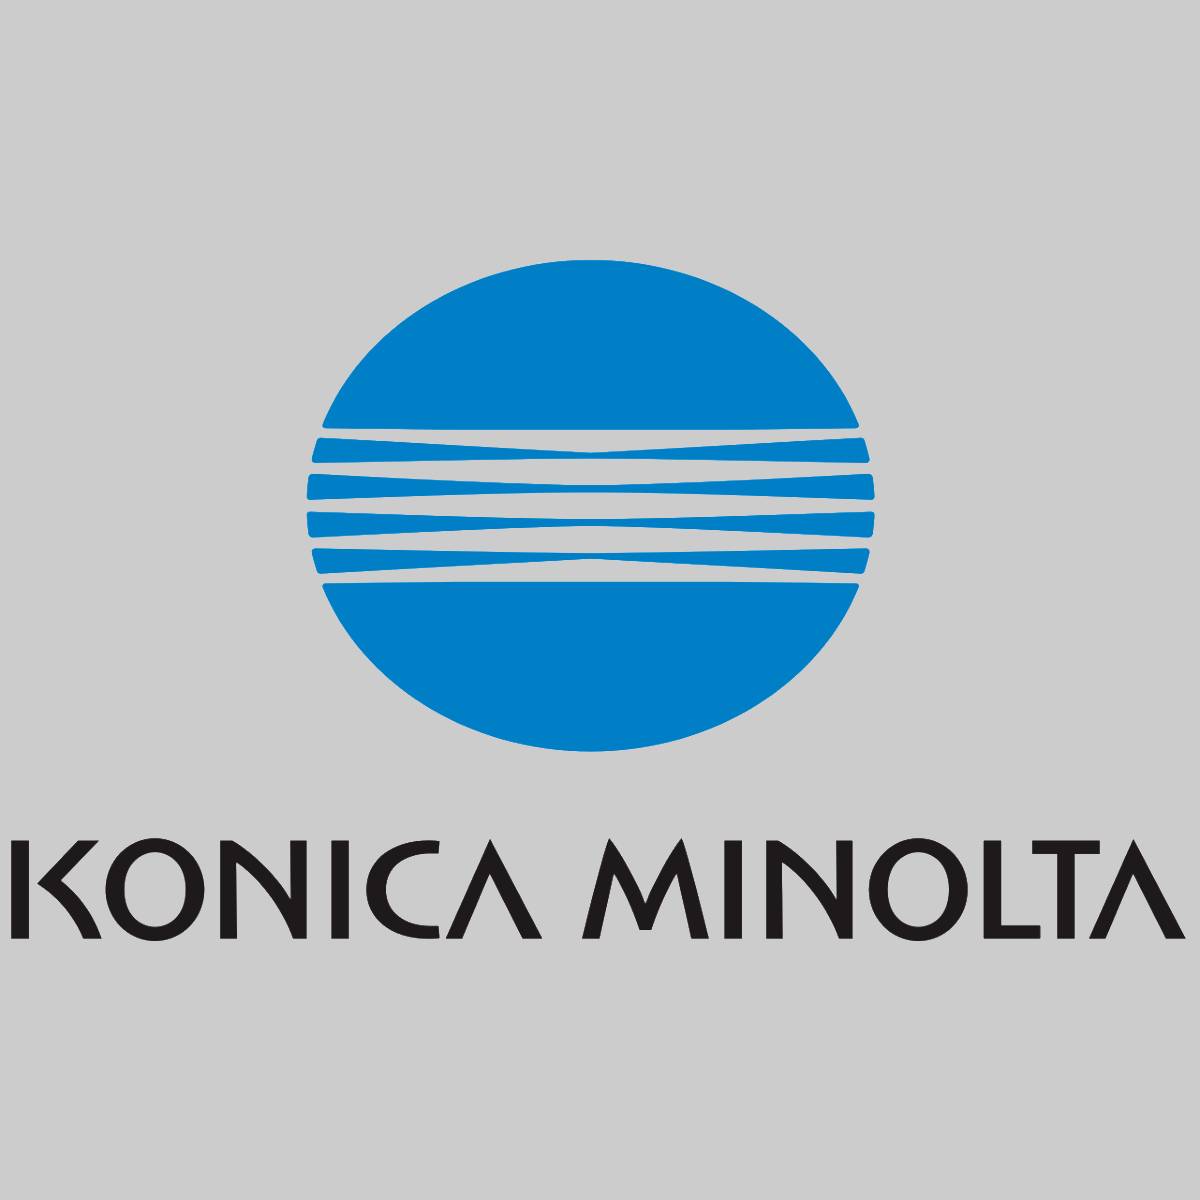 "Original Konica Minolta Toner Cartridge Magenta 8937-921 CF 2002 CF 3102 CF 310